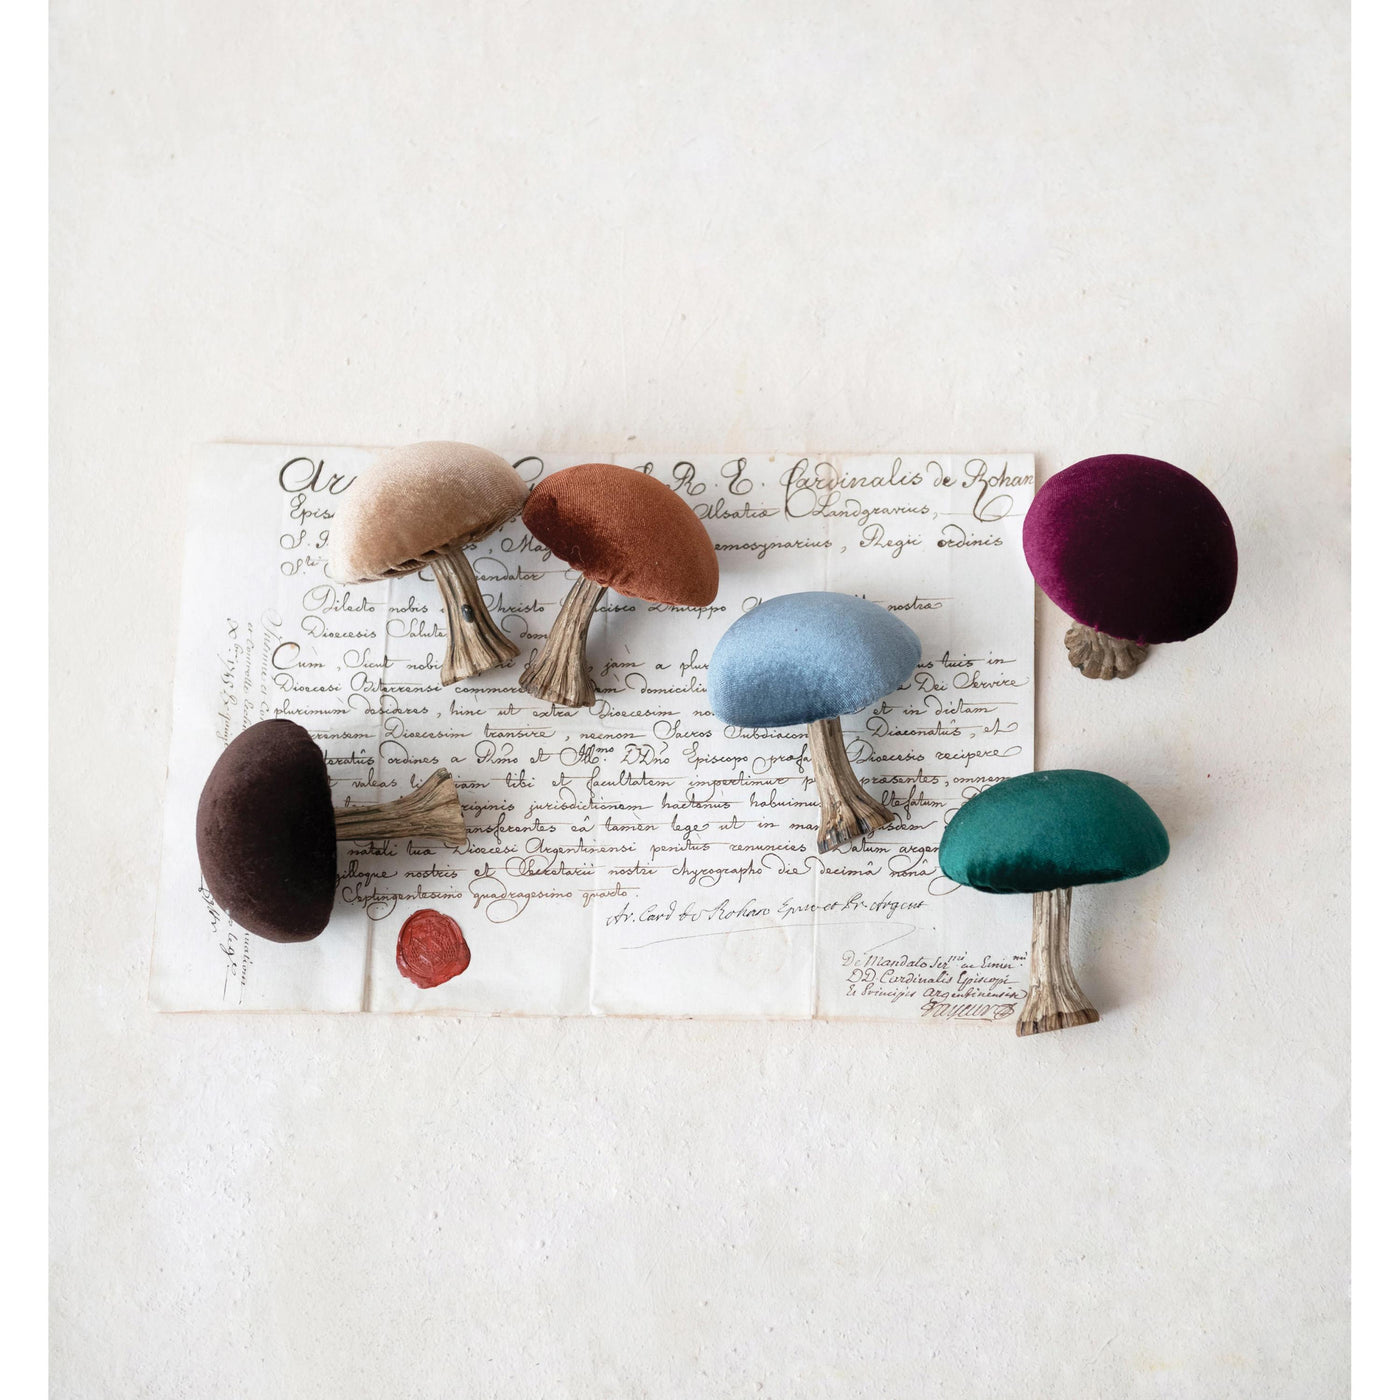 Jewel-Toned Velvet Topped Mushrooms - Choose Color